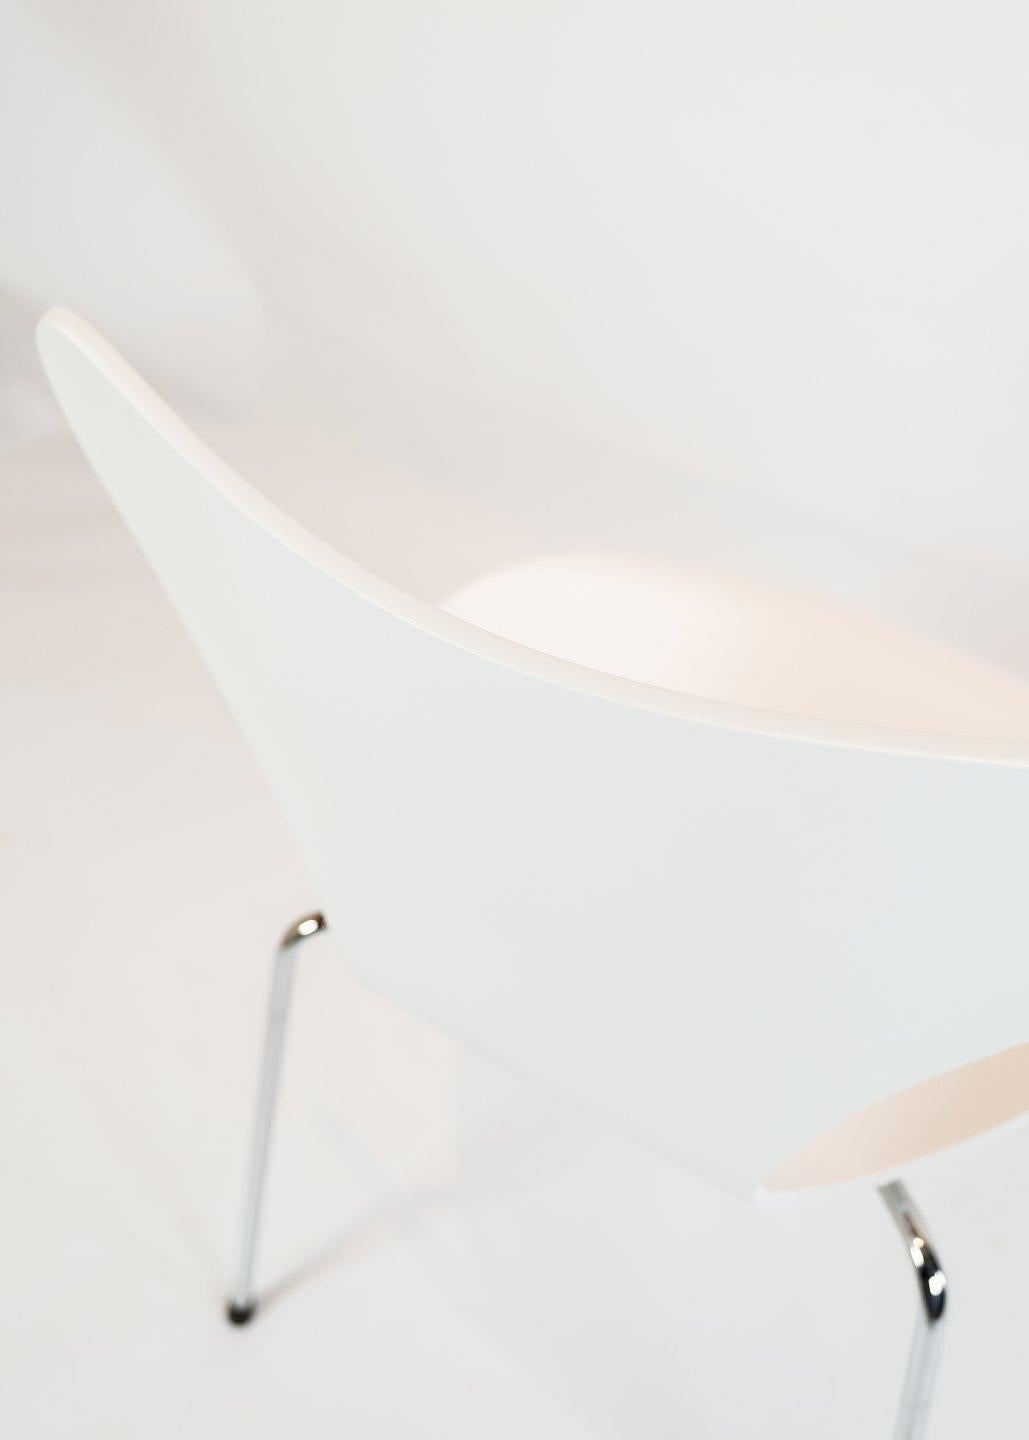 Danish Set of 8 Seven Chairs, Model 3107, Designed by Arne Jacobsen